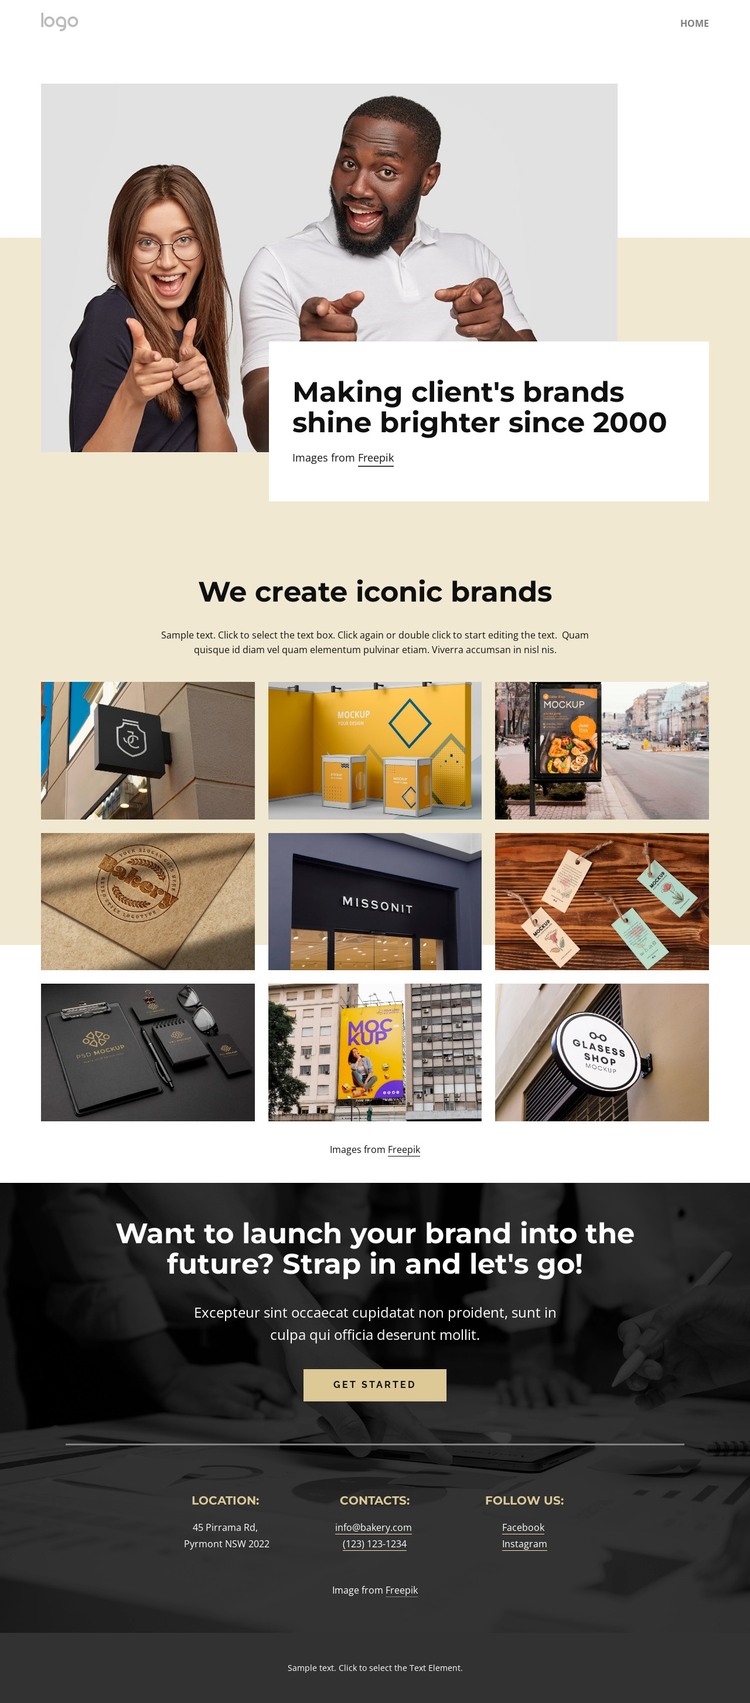 We create iconic brands Web Design